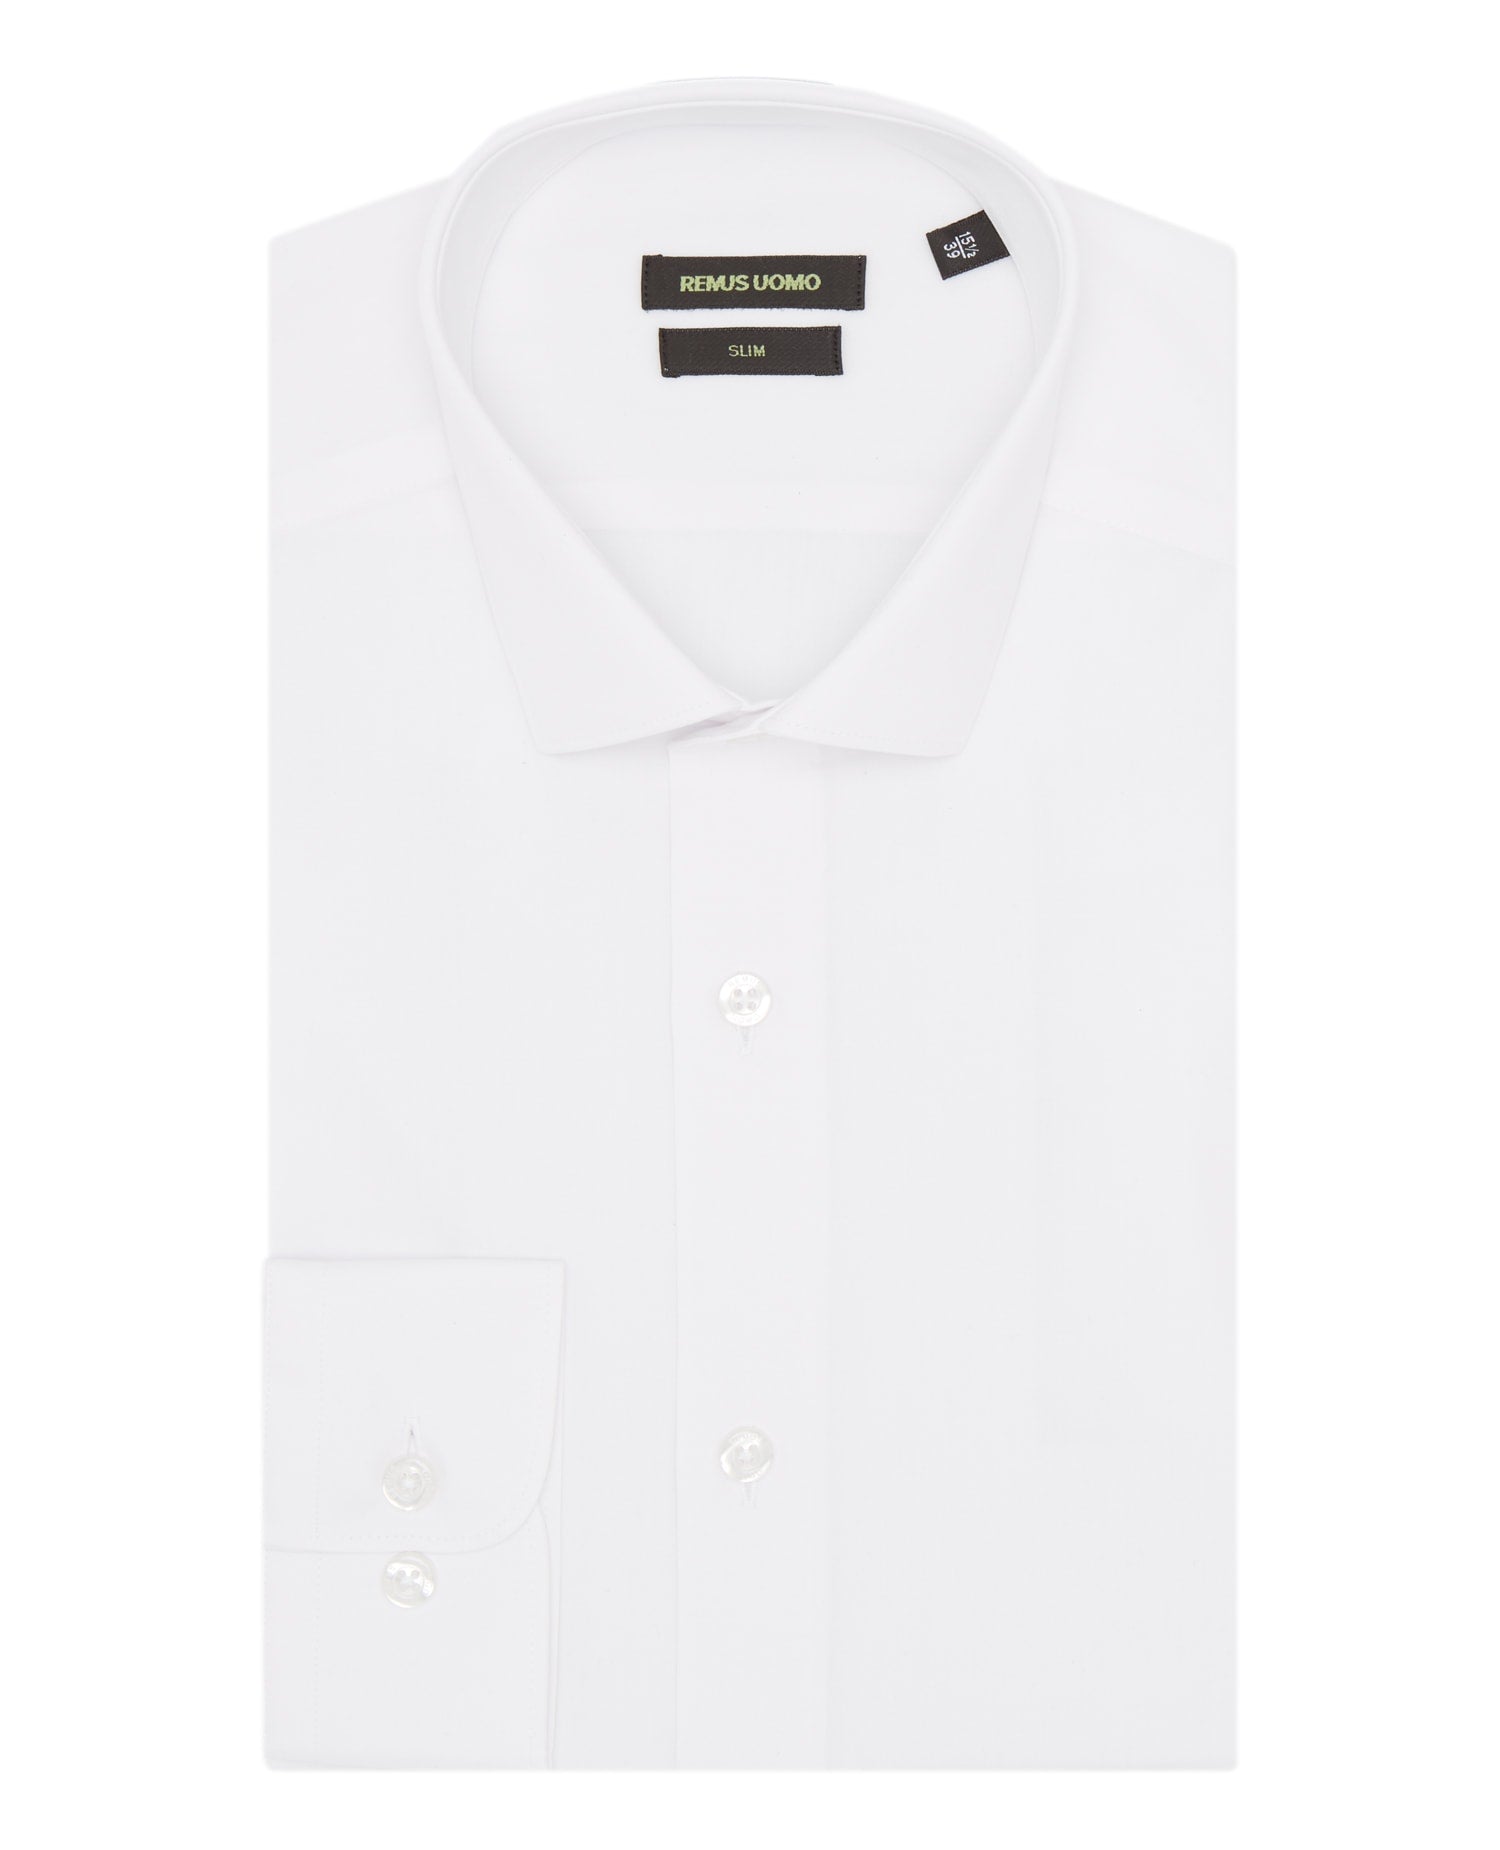 Remus Uomo ... White Rome Long Sleeve Formal Shirt - Slim Fit (890/01)